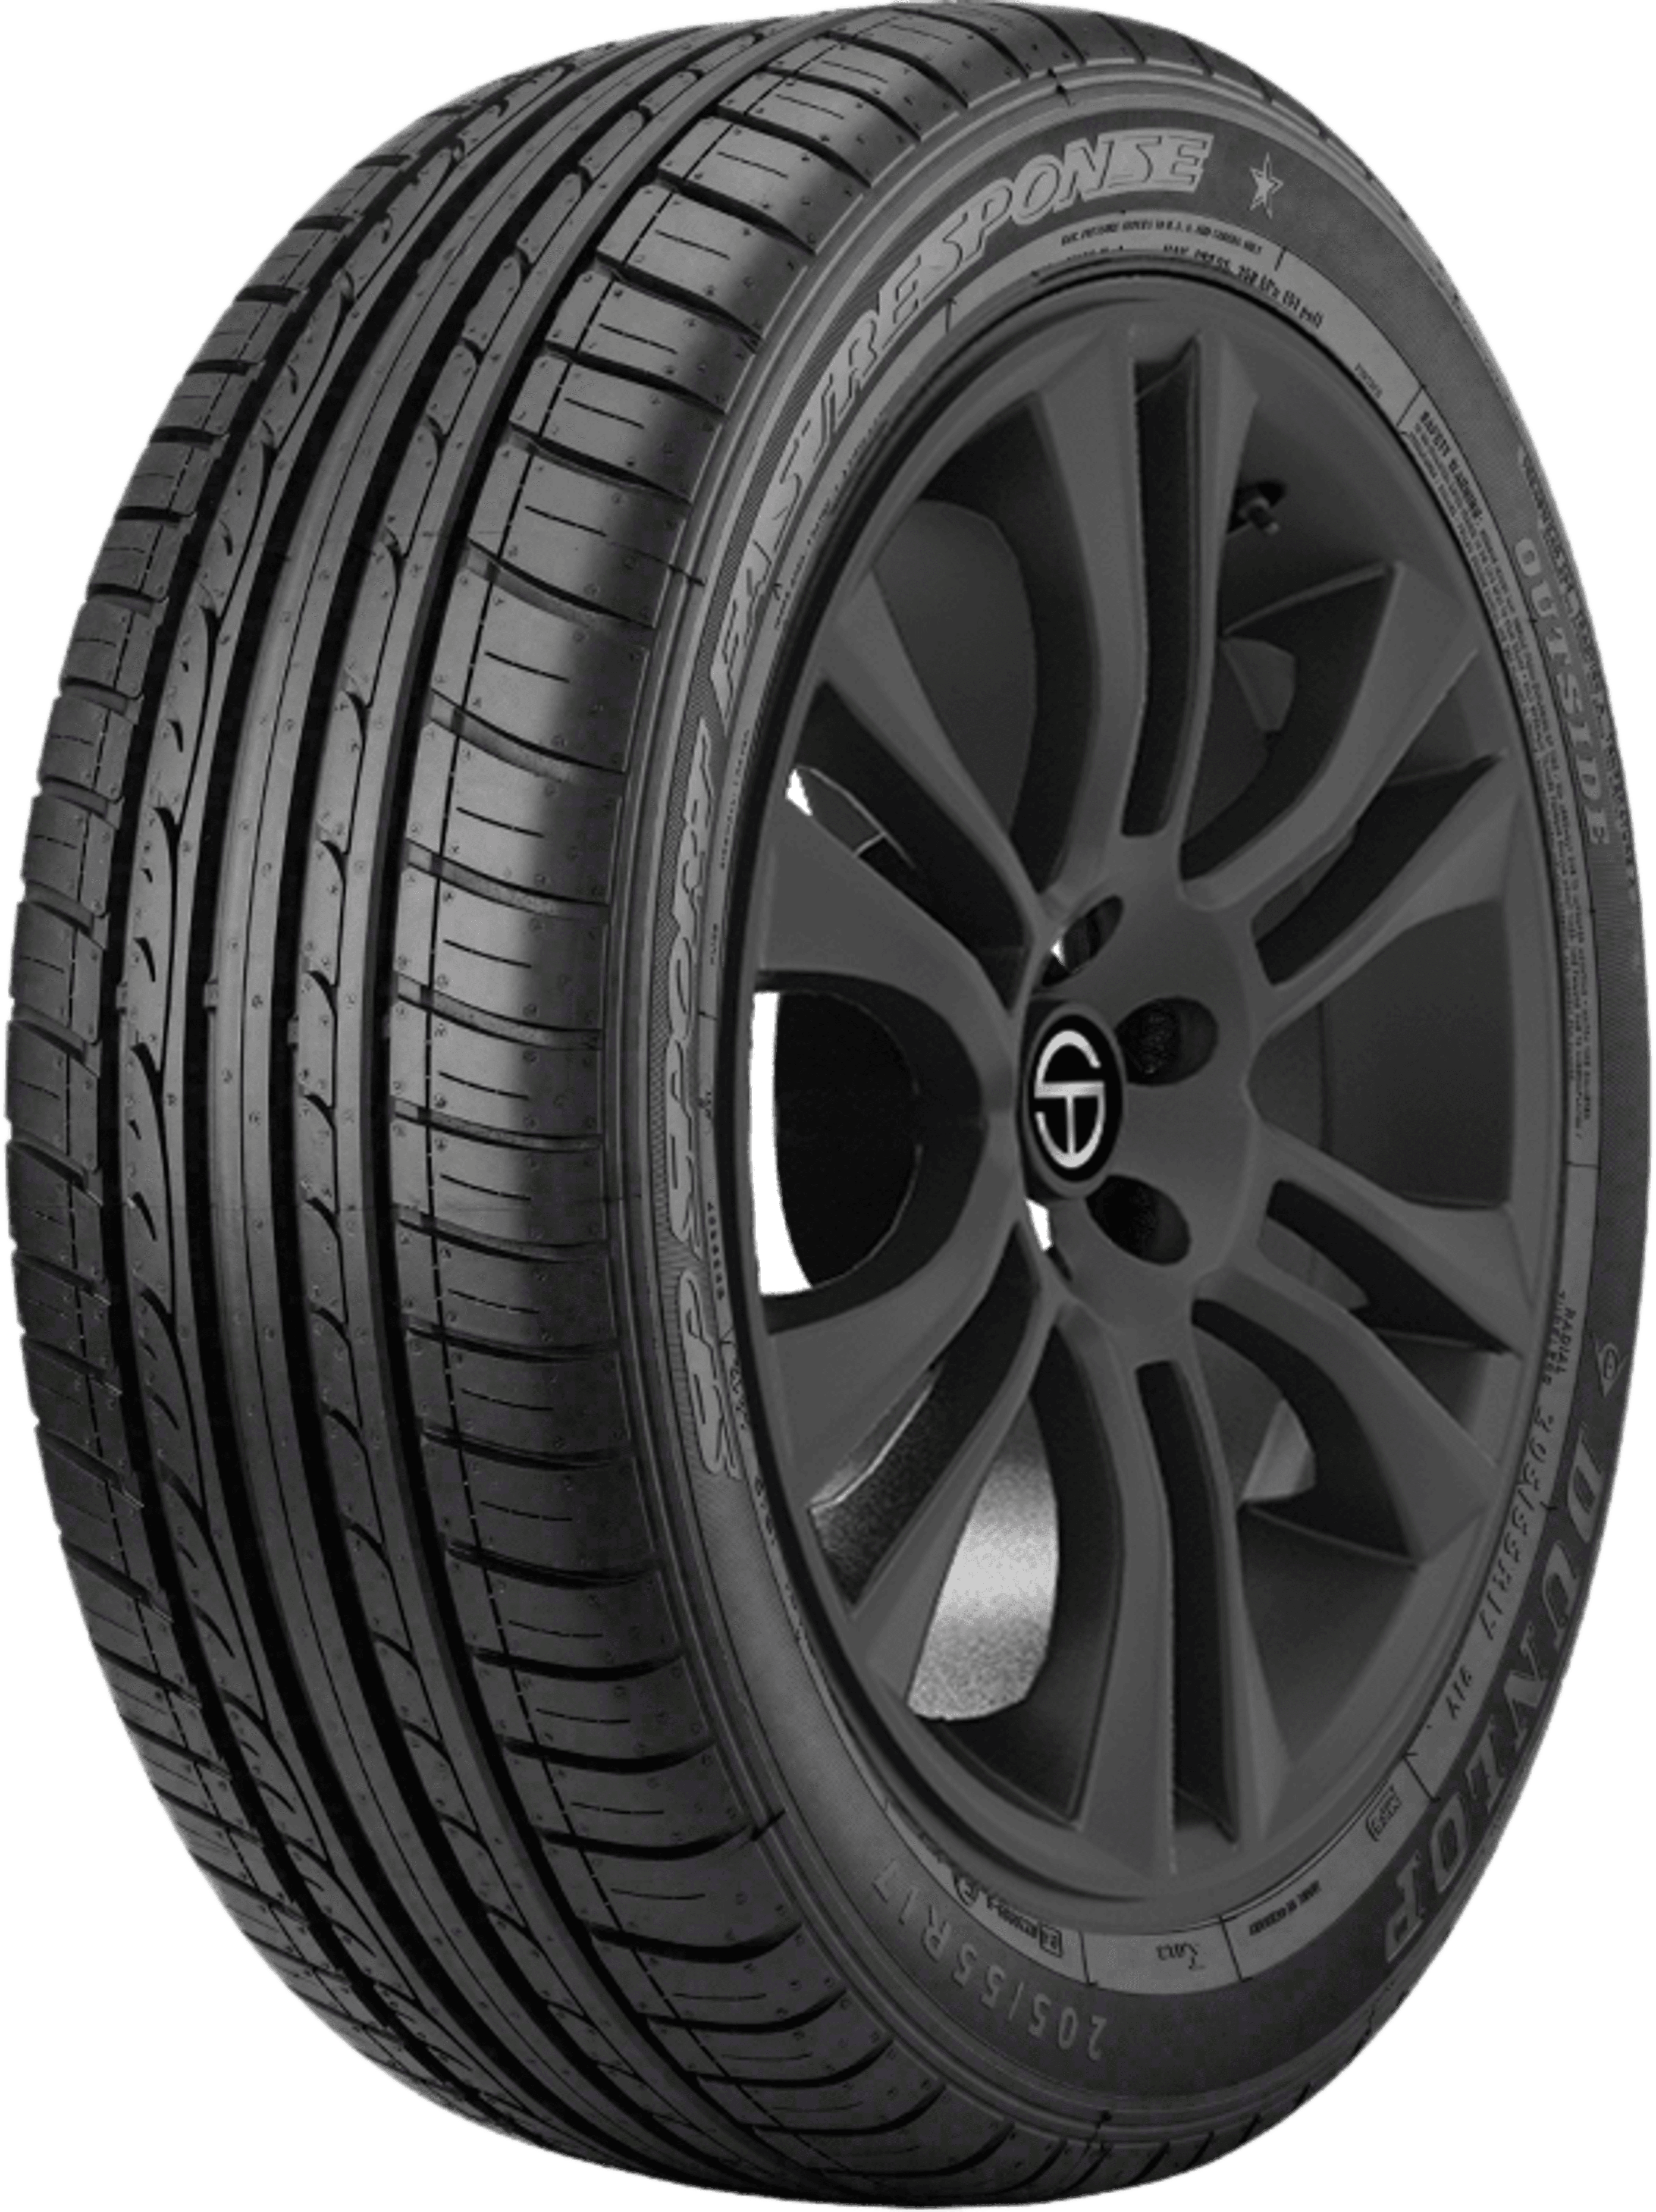 | Buy Online SimpleTire Fast Sp Tires Sport Response Dunlop